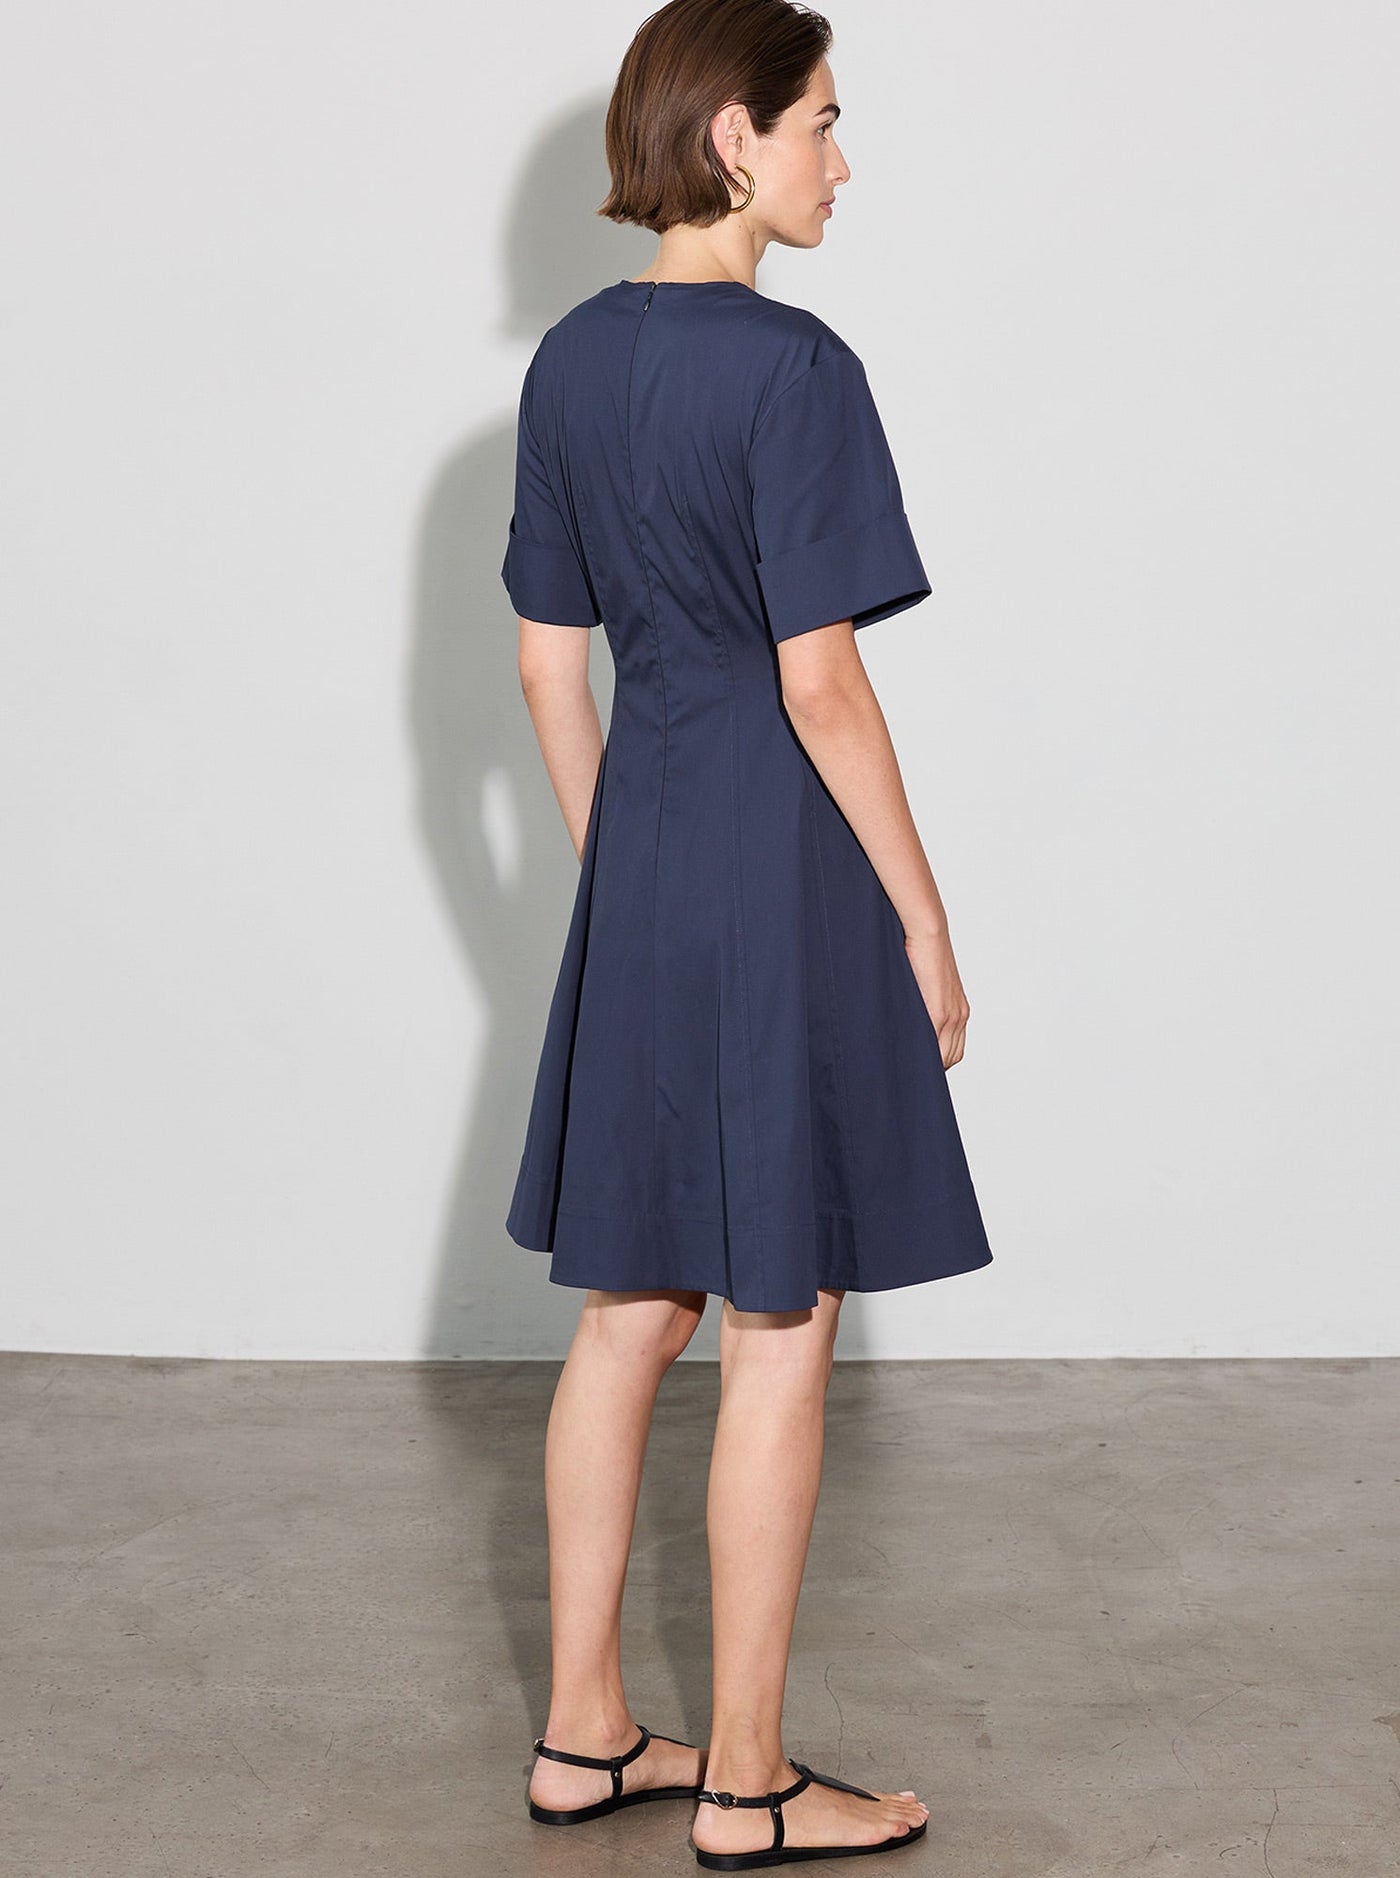 SORA - Short Sleeve Dress With Flared Skirt